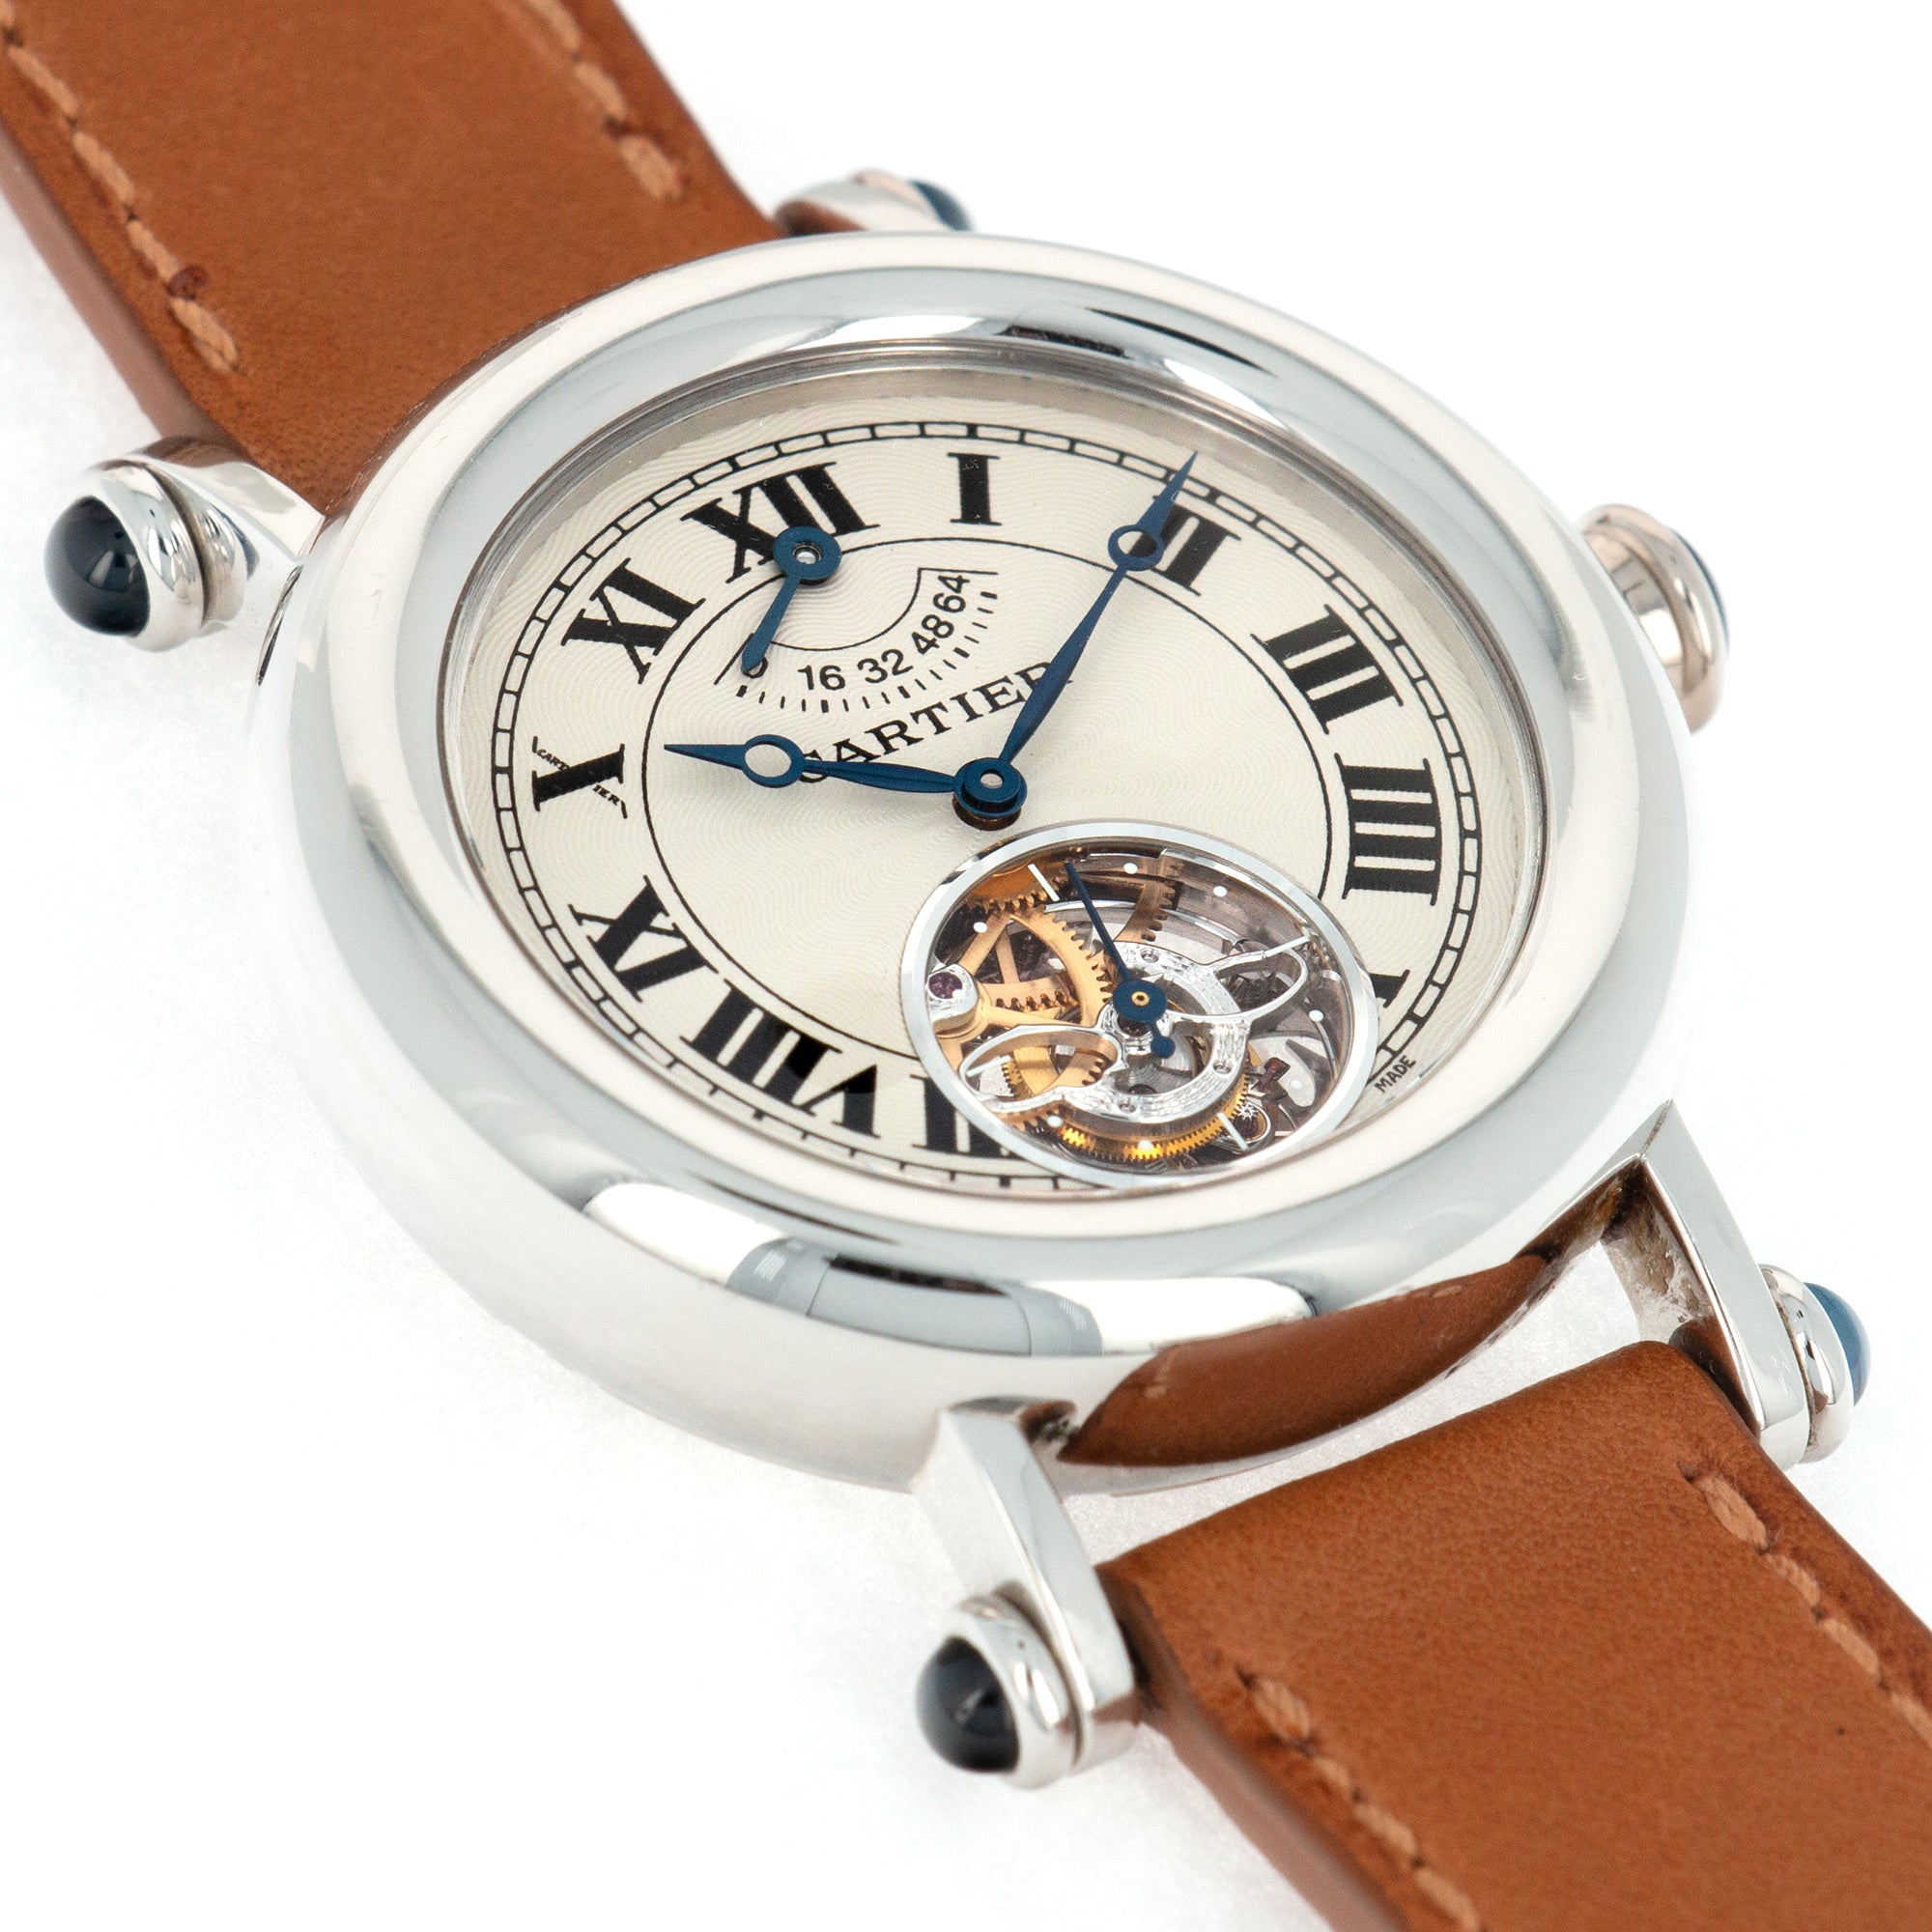 Cartier - Cartier Platinum Diabolo Tourbillon Watch - The Keystone Watches